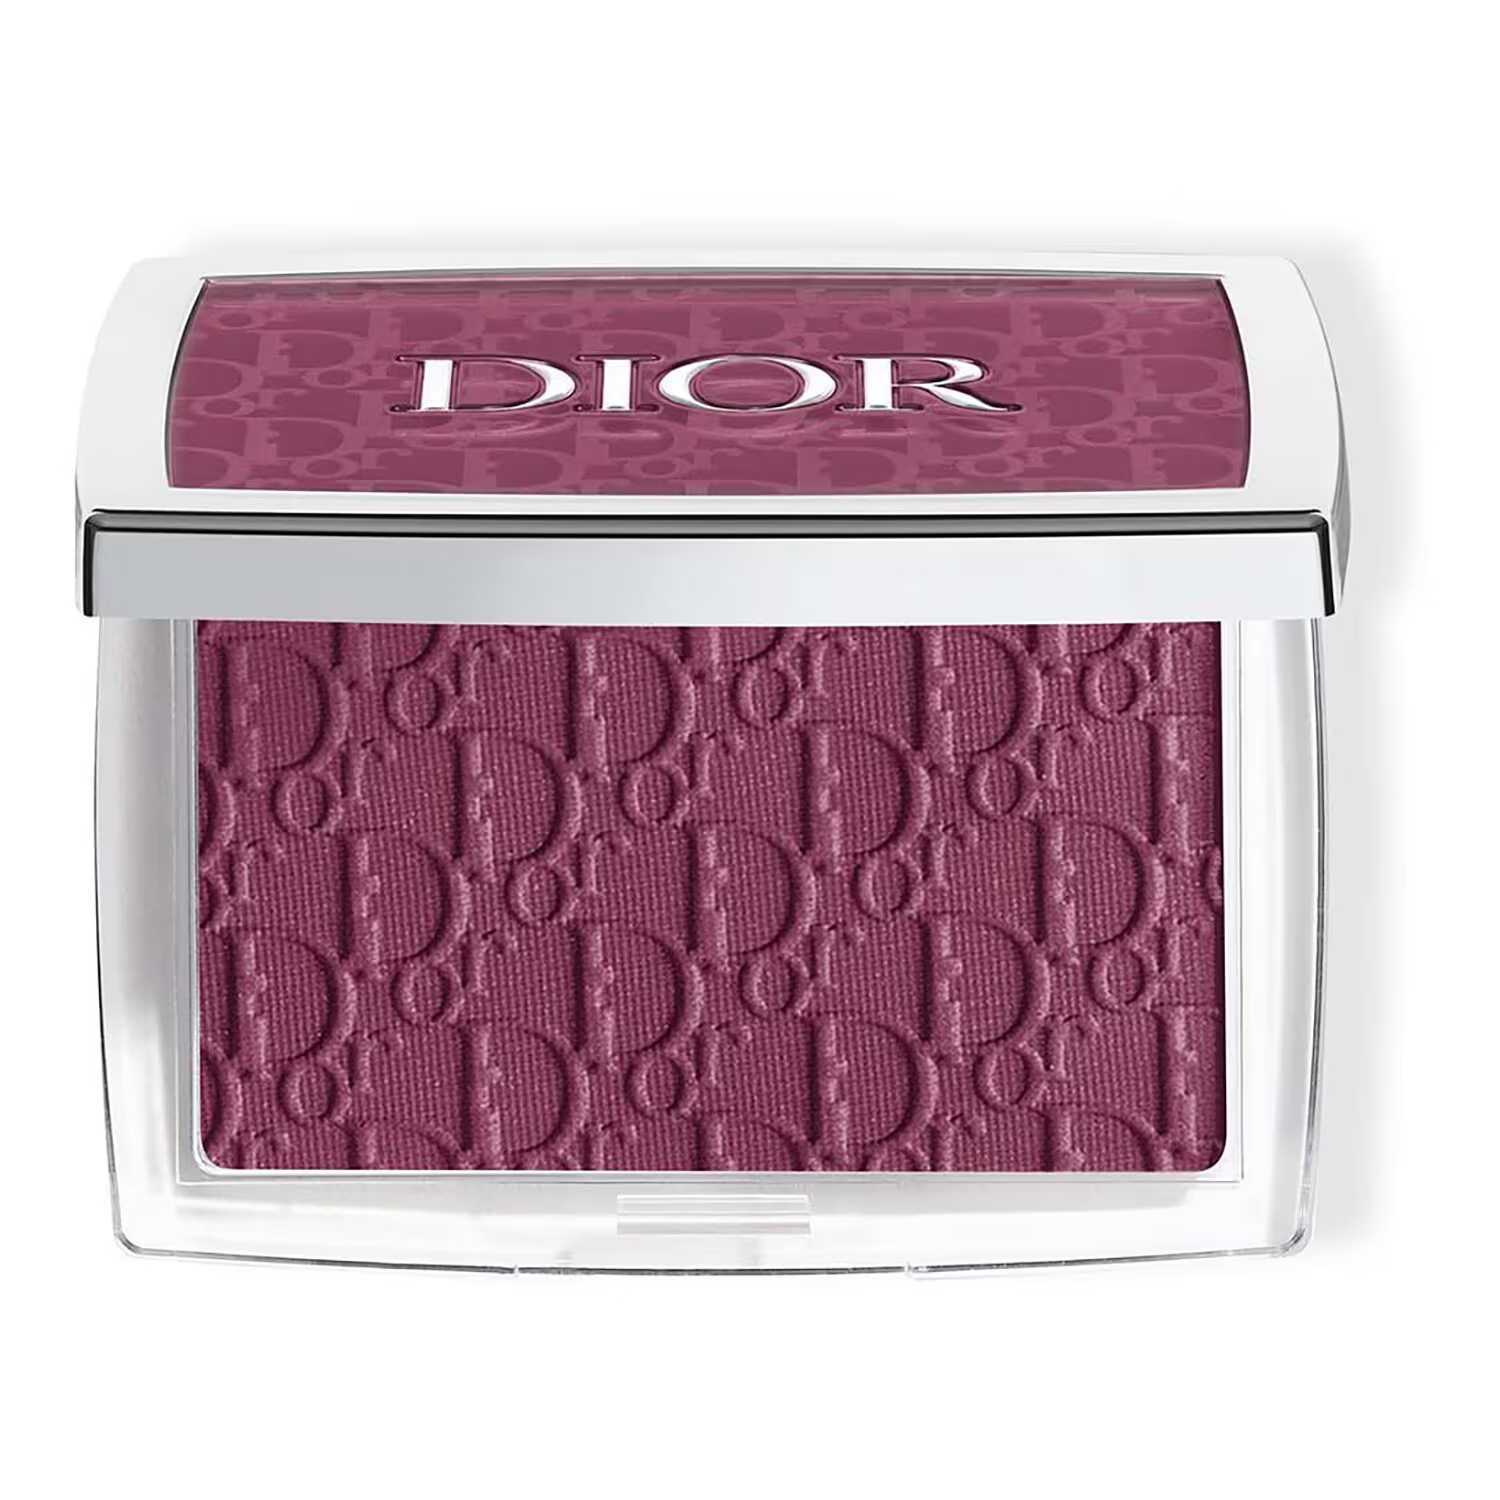 Dior Tvárenka Rosy Glow (Blush) 4,4 g 006 Berry